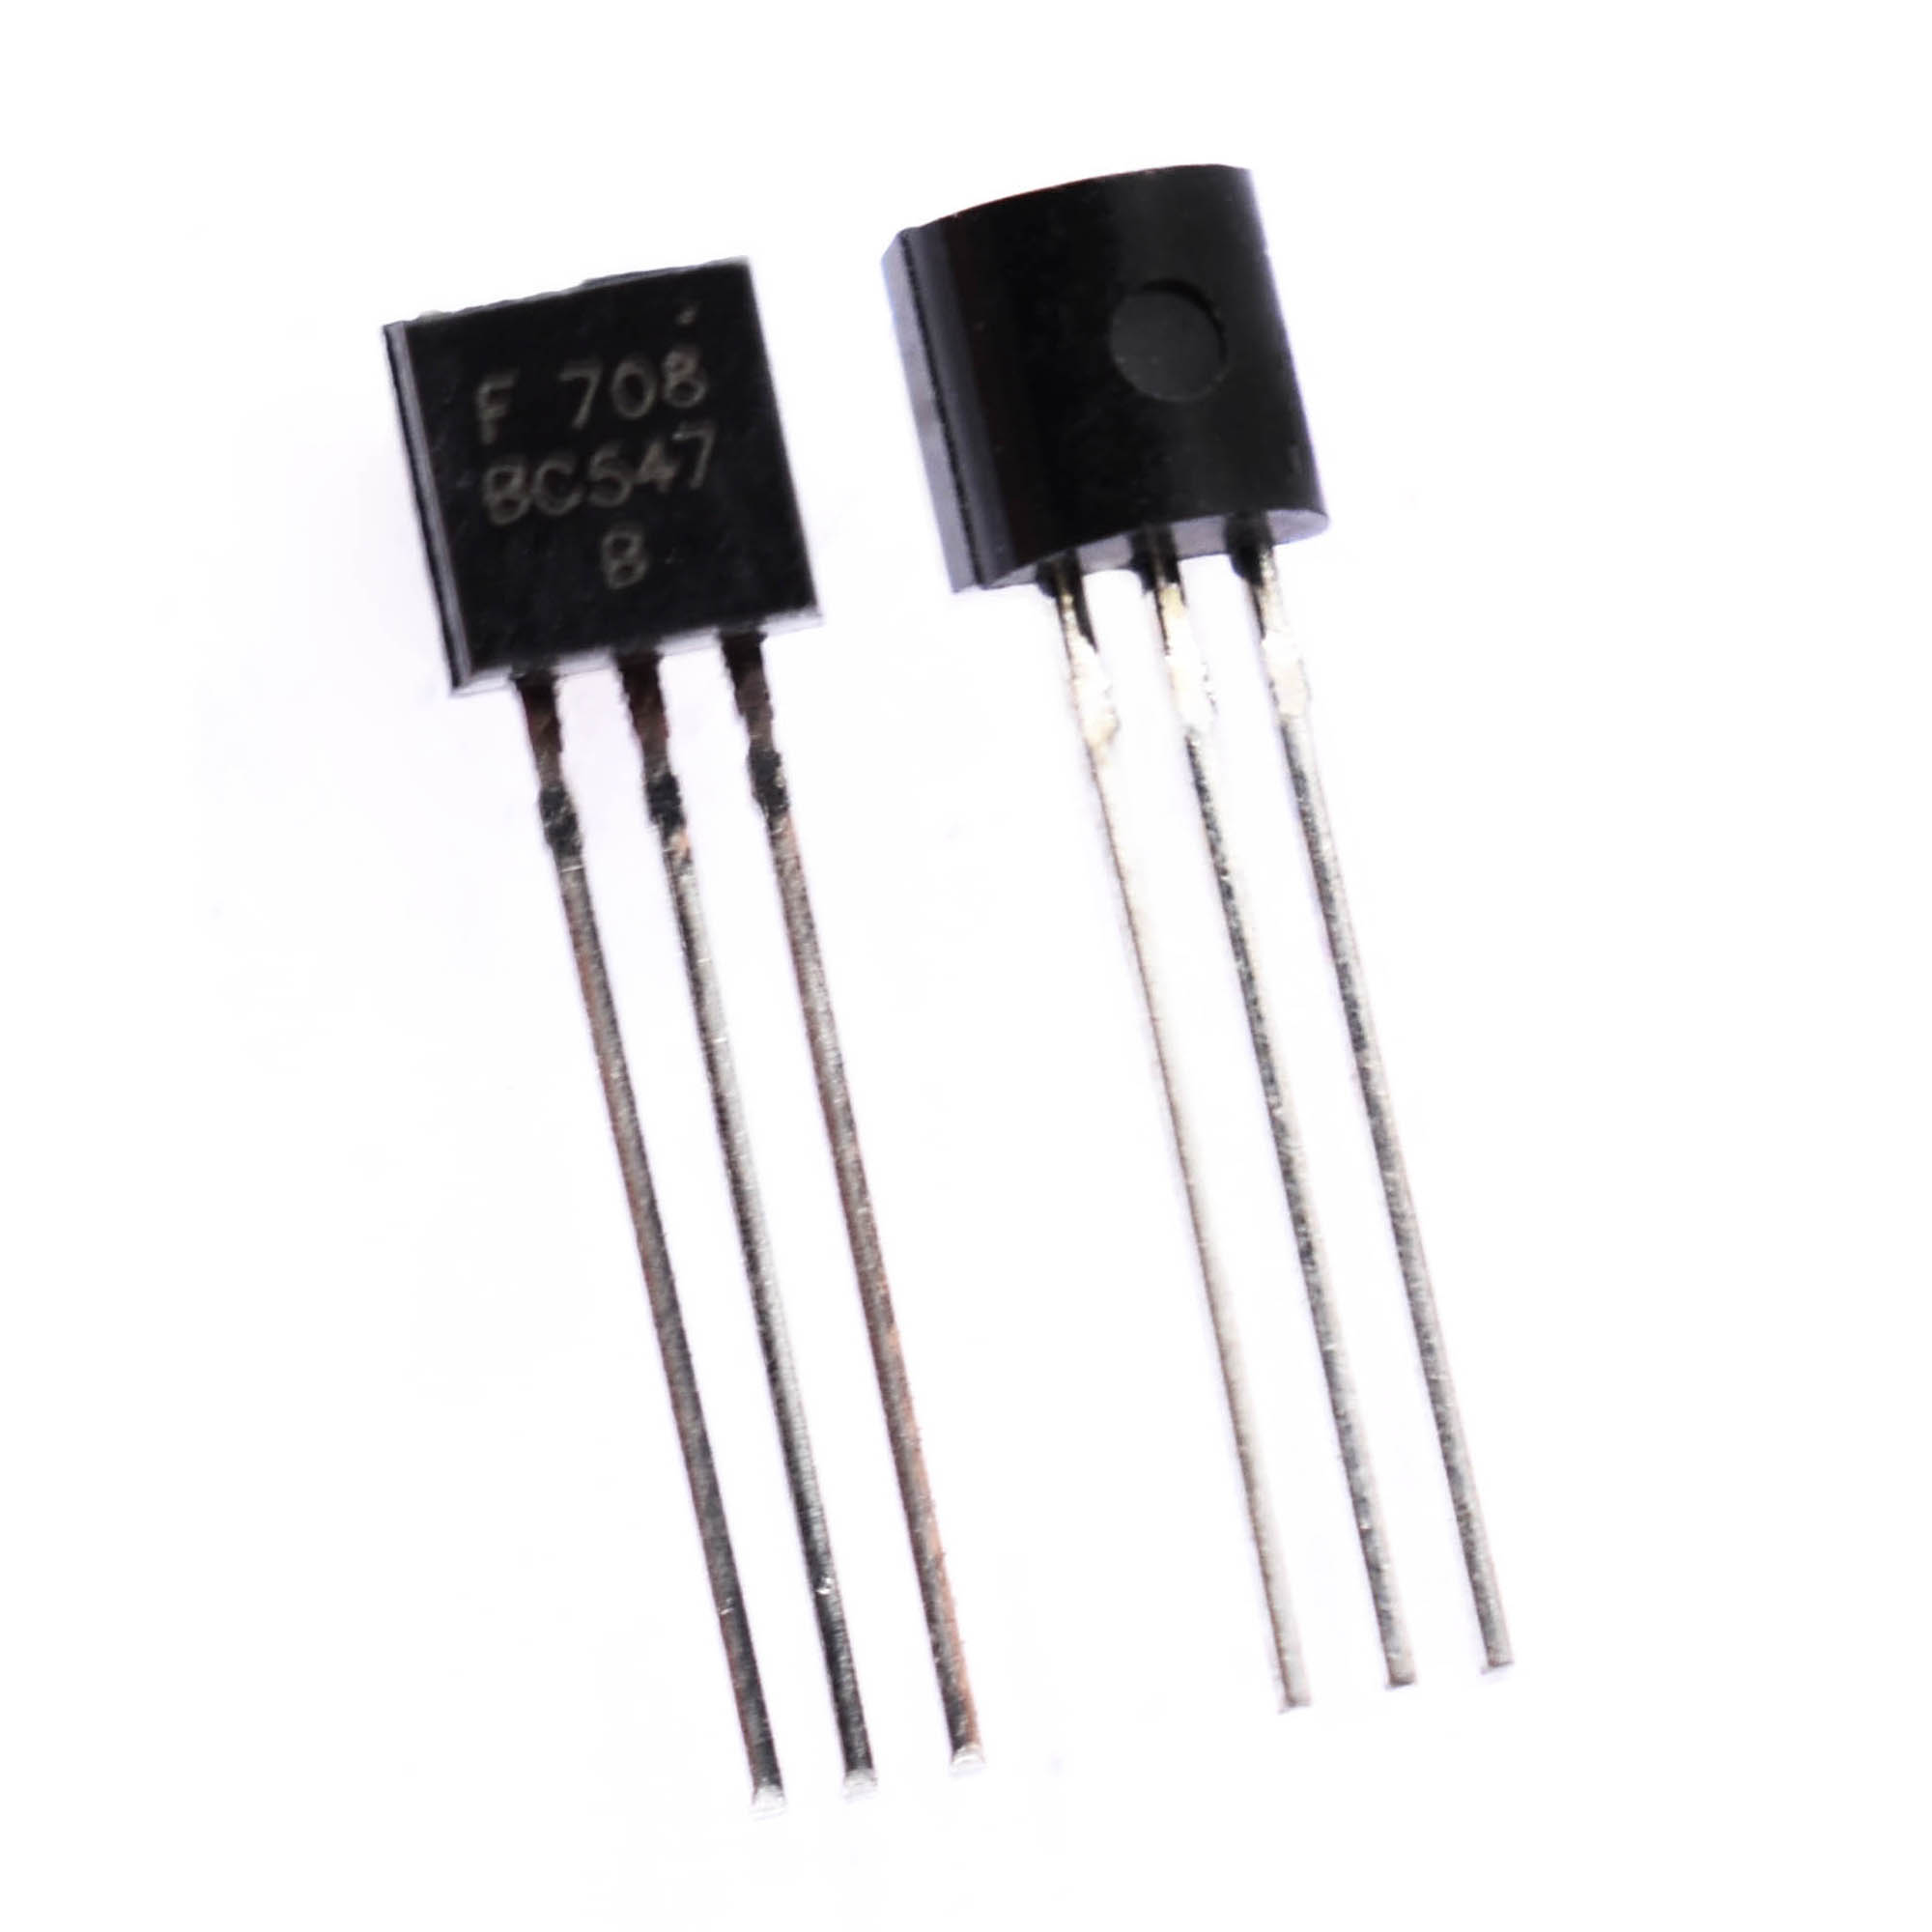 100PCS 2N3904 TO-92 NPN General Purpose Transistor IC BBC